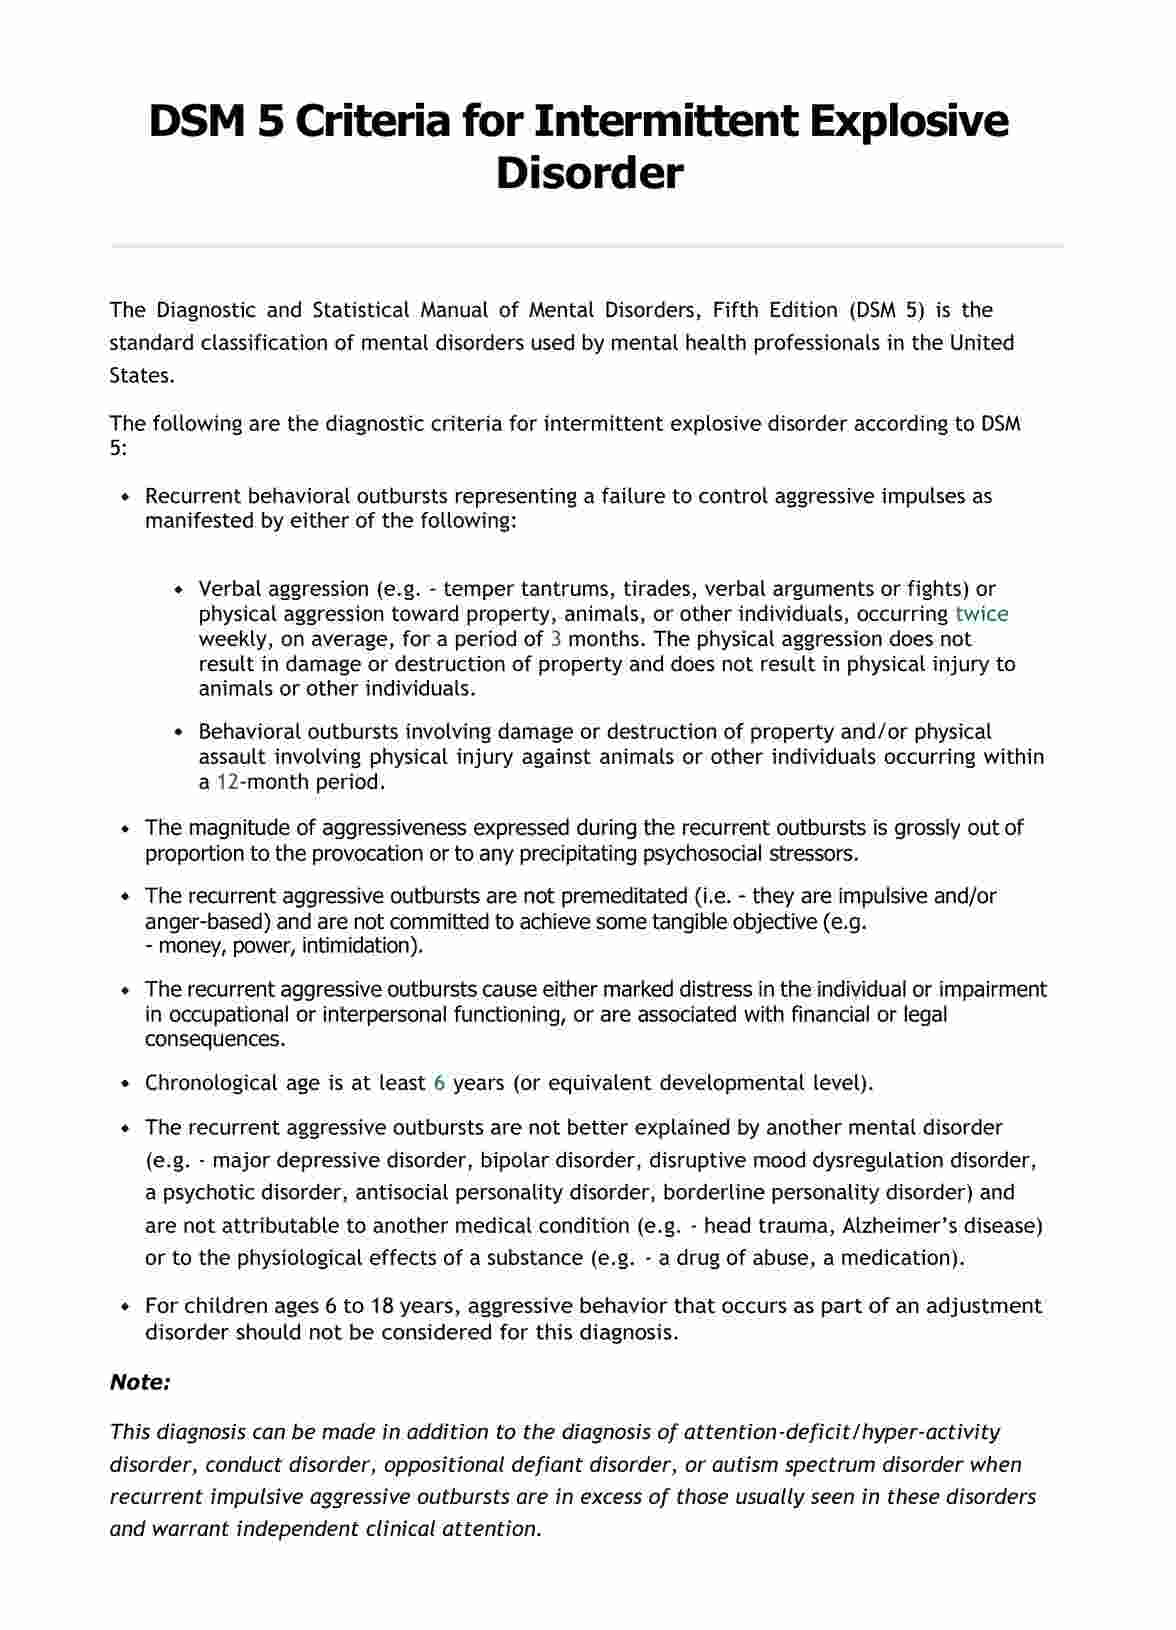 DSM 5 Criteria for Intermittent Explosive Disorder PDF Example